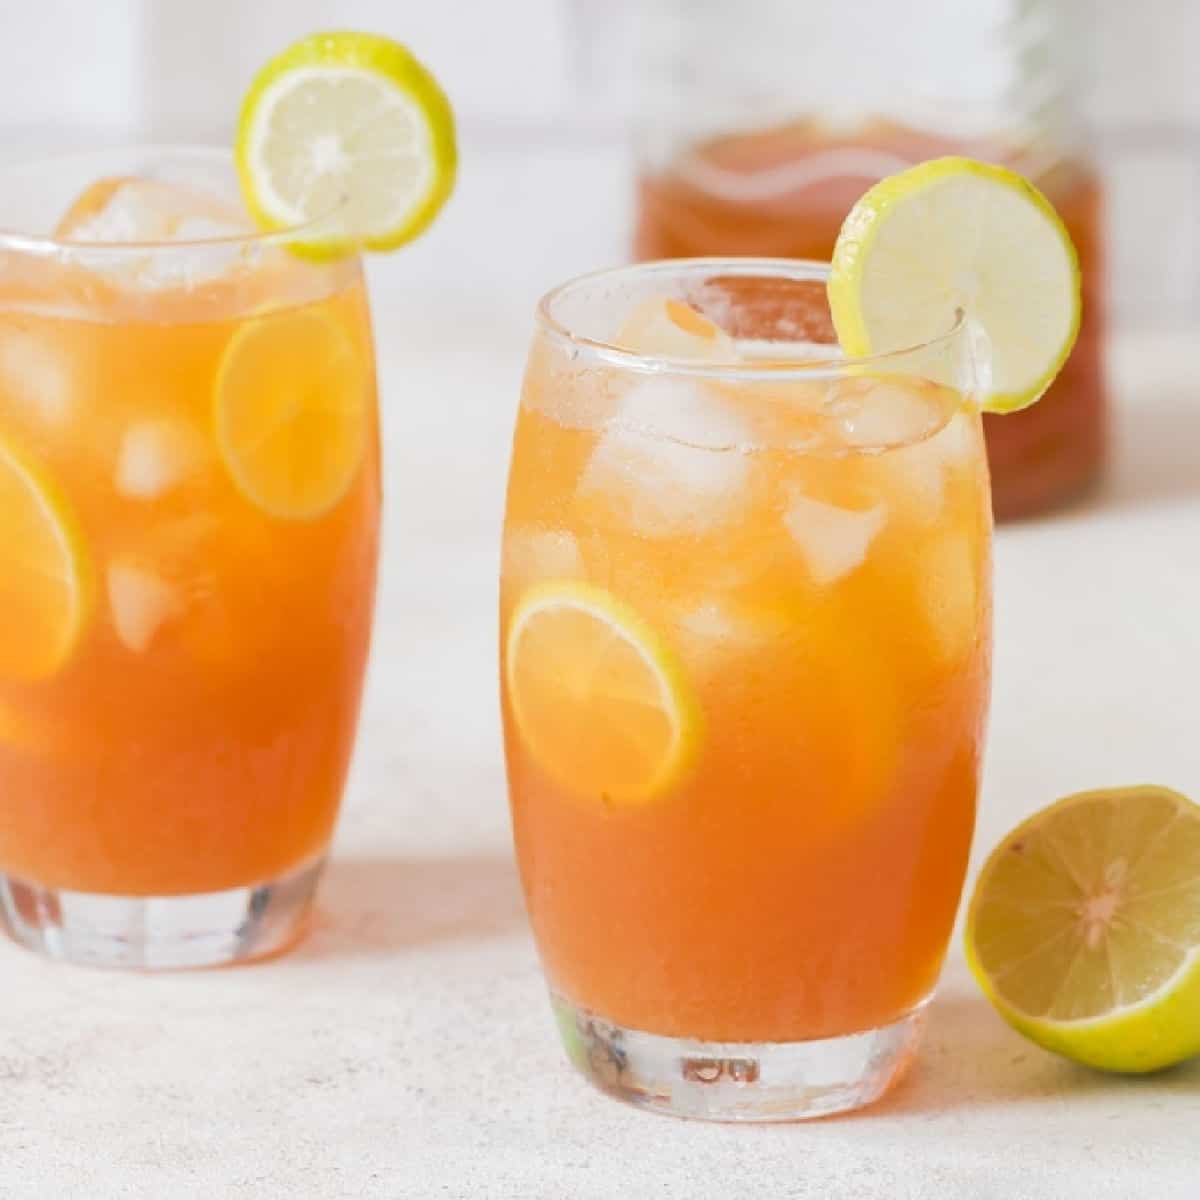 Honey lemon ice tea